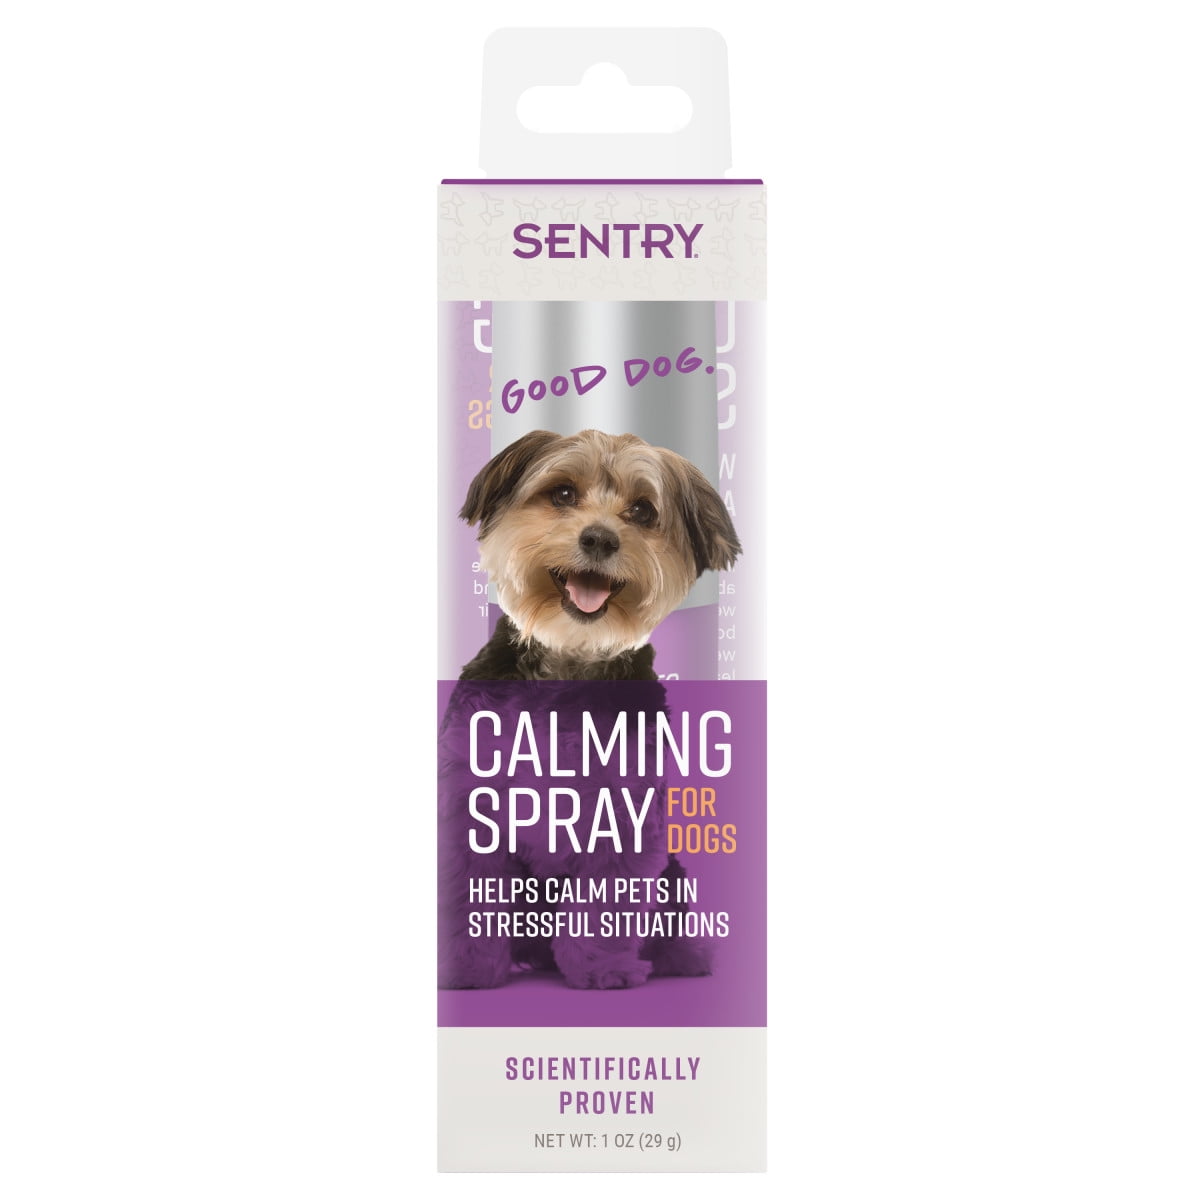 Sentry Calming Spray for Dogs, 1 oz.